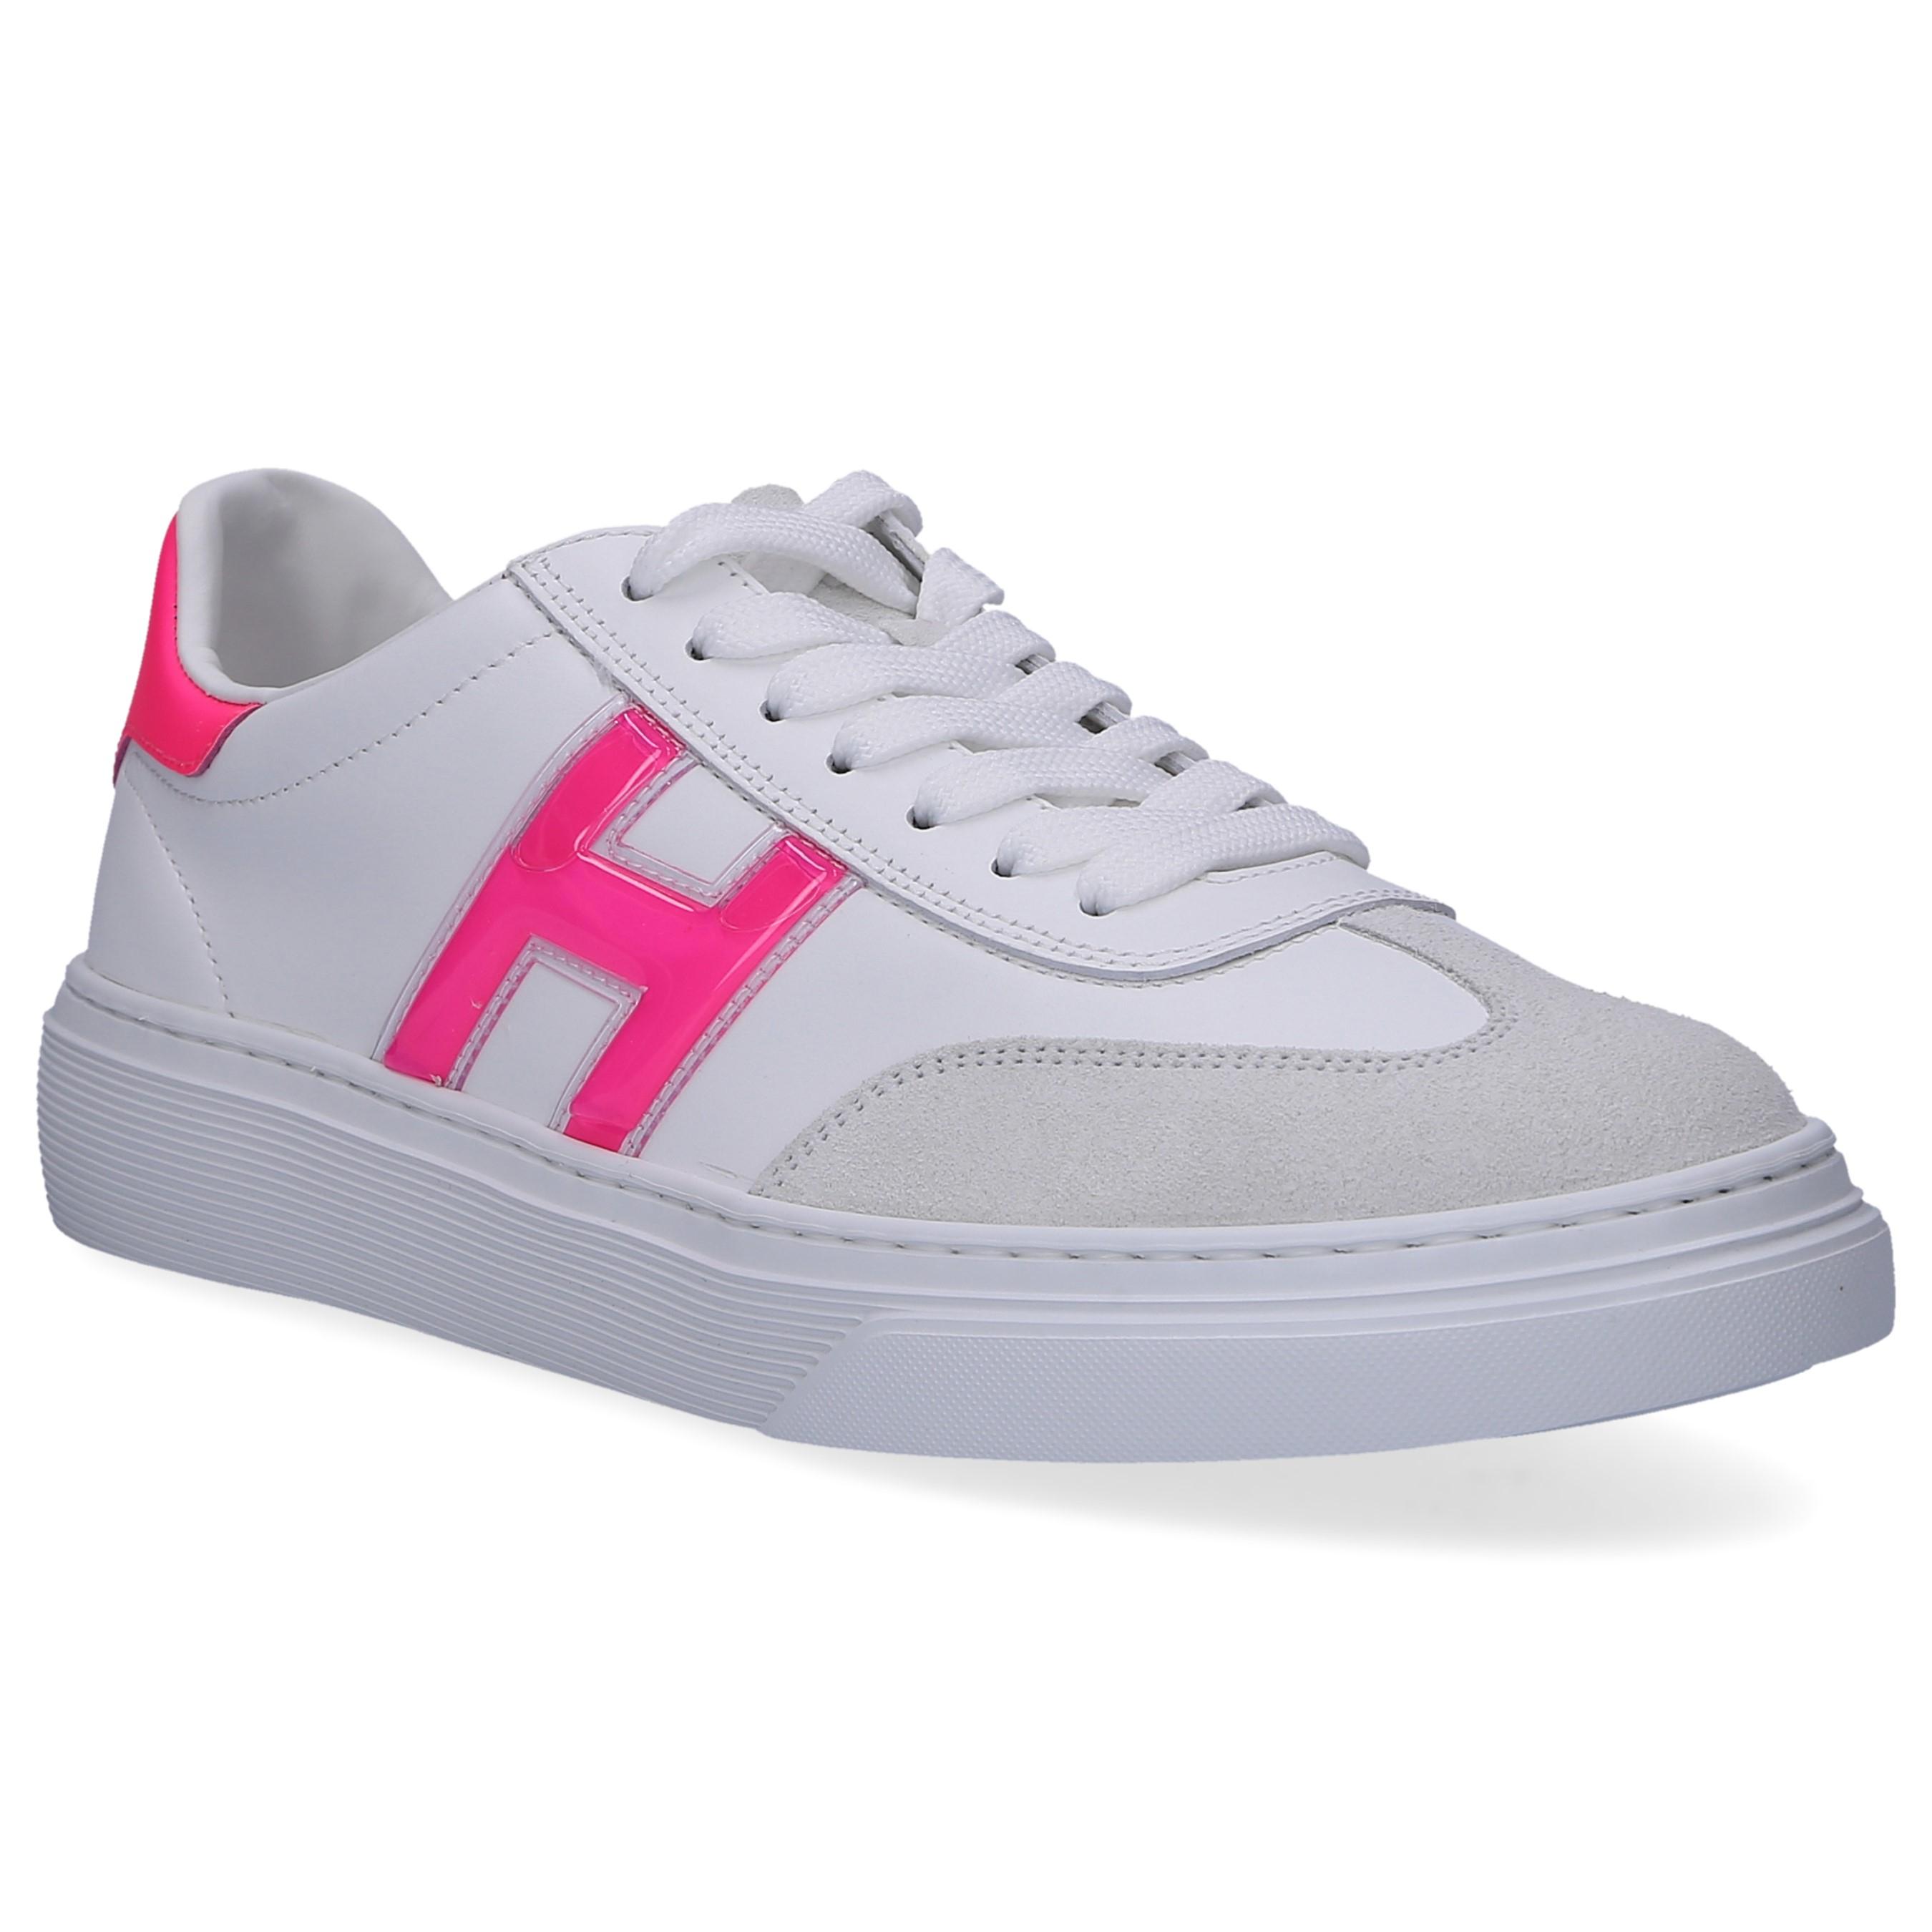 Hogan Leather Low-top Sneakers H365 Gel in White - Lyst